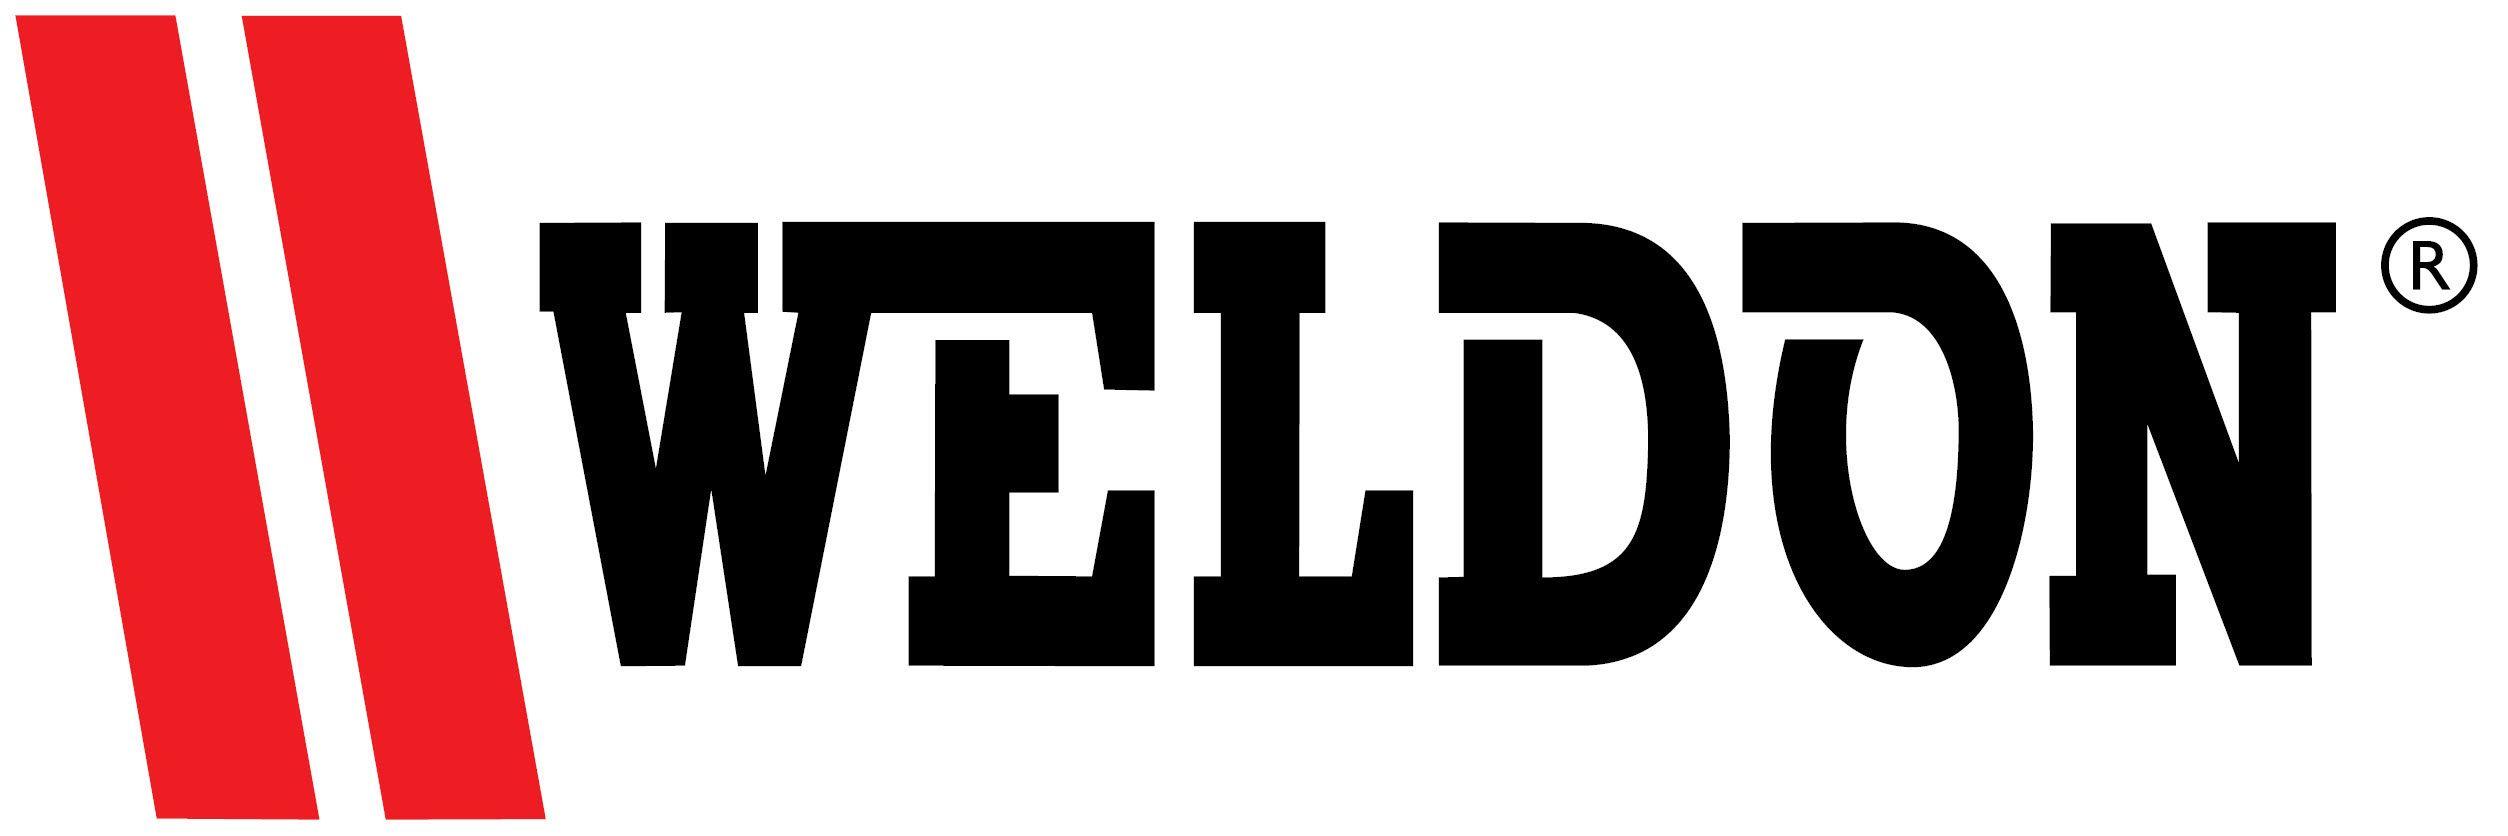 Weldon Logo - Speciale palletwagens Intern Transport importeur van